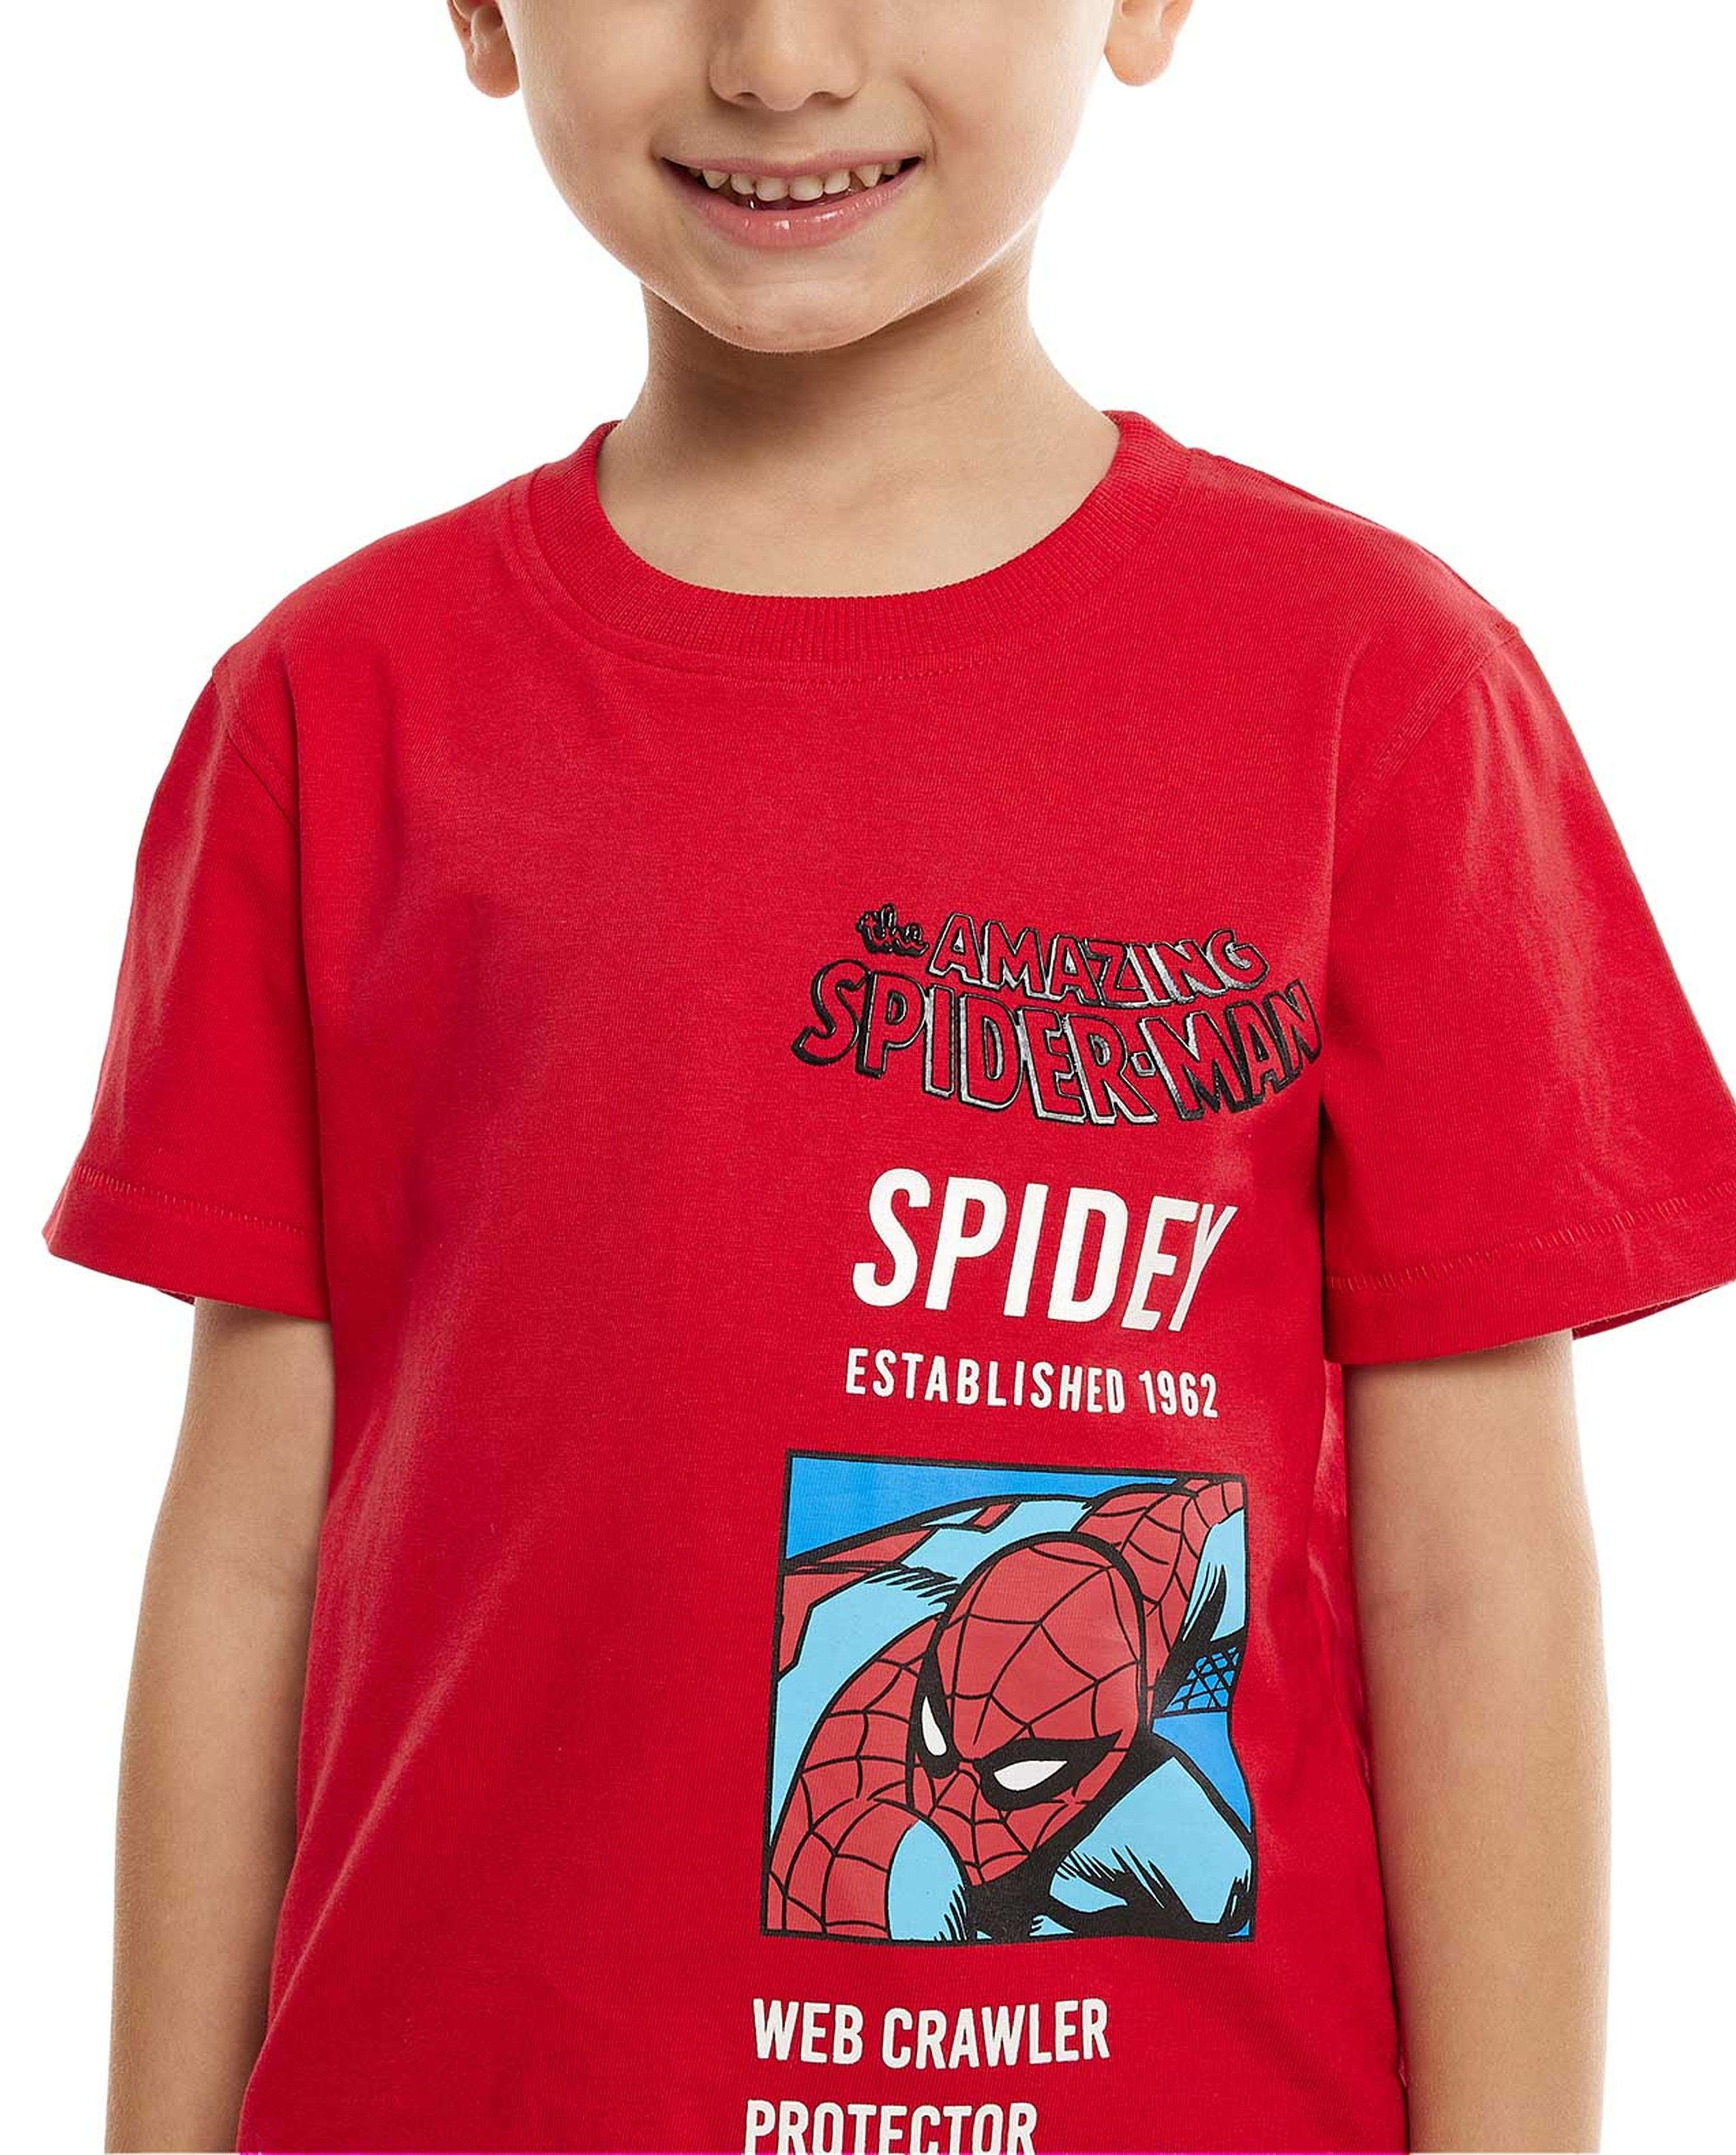 Spiderman Printed Clothing Set